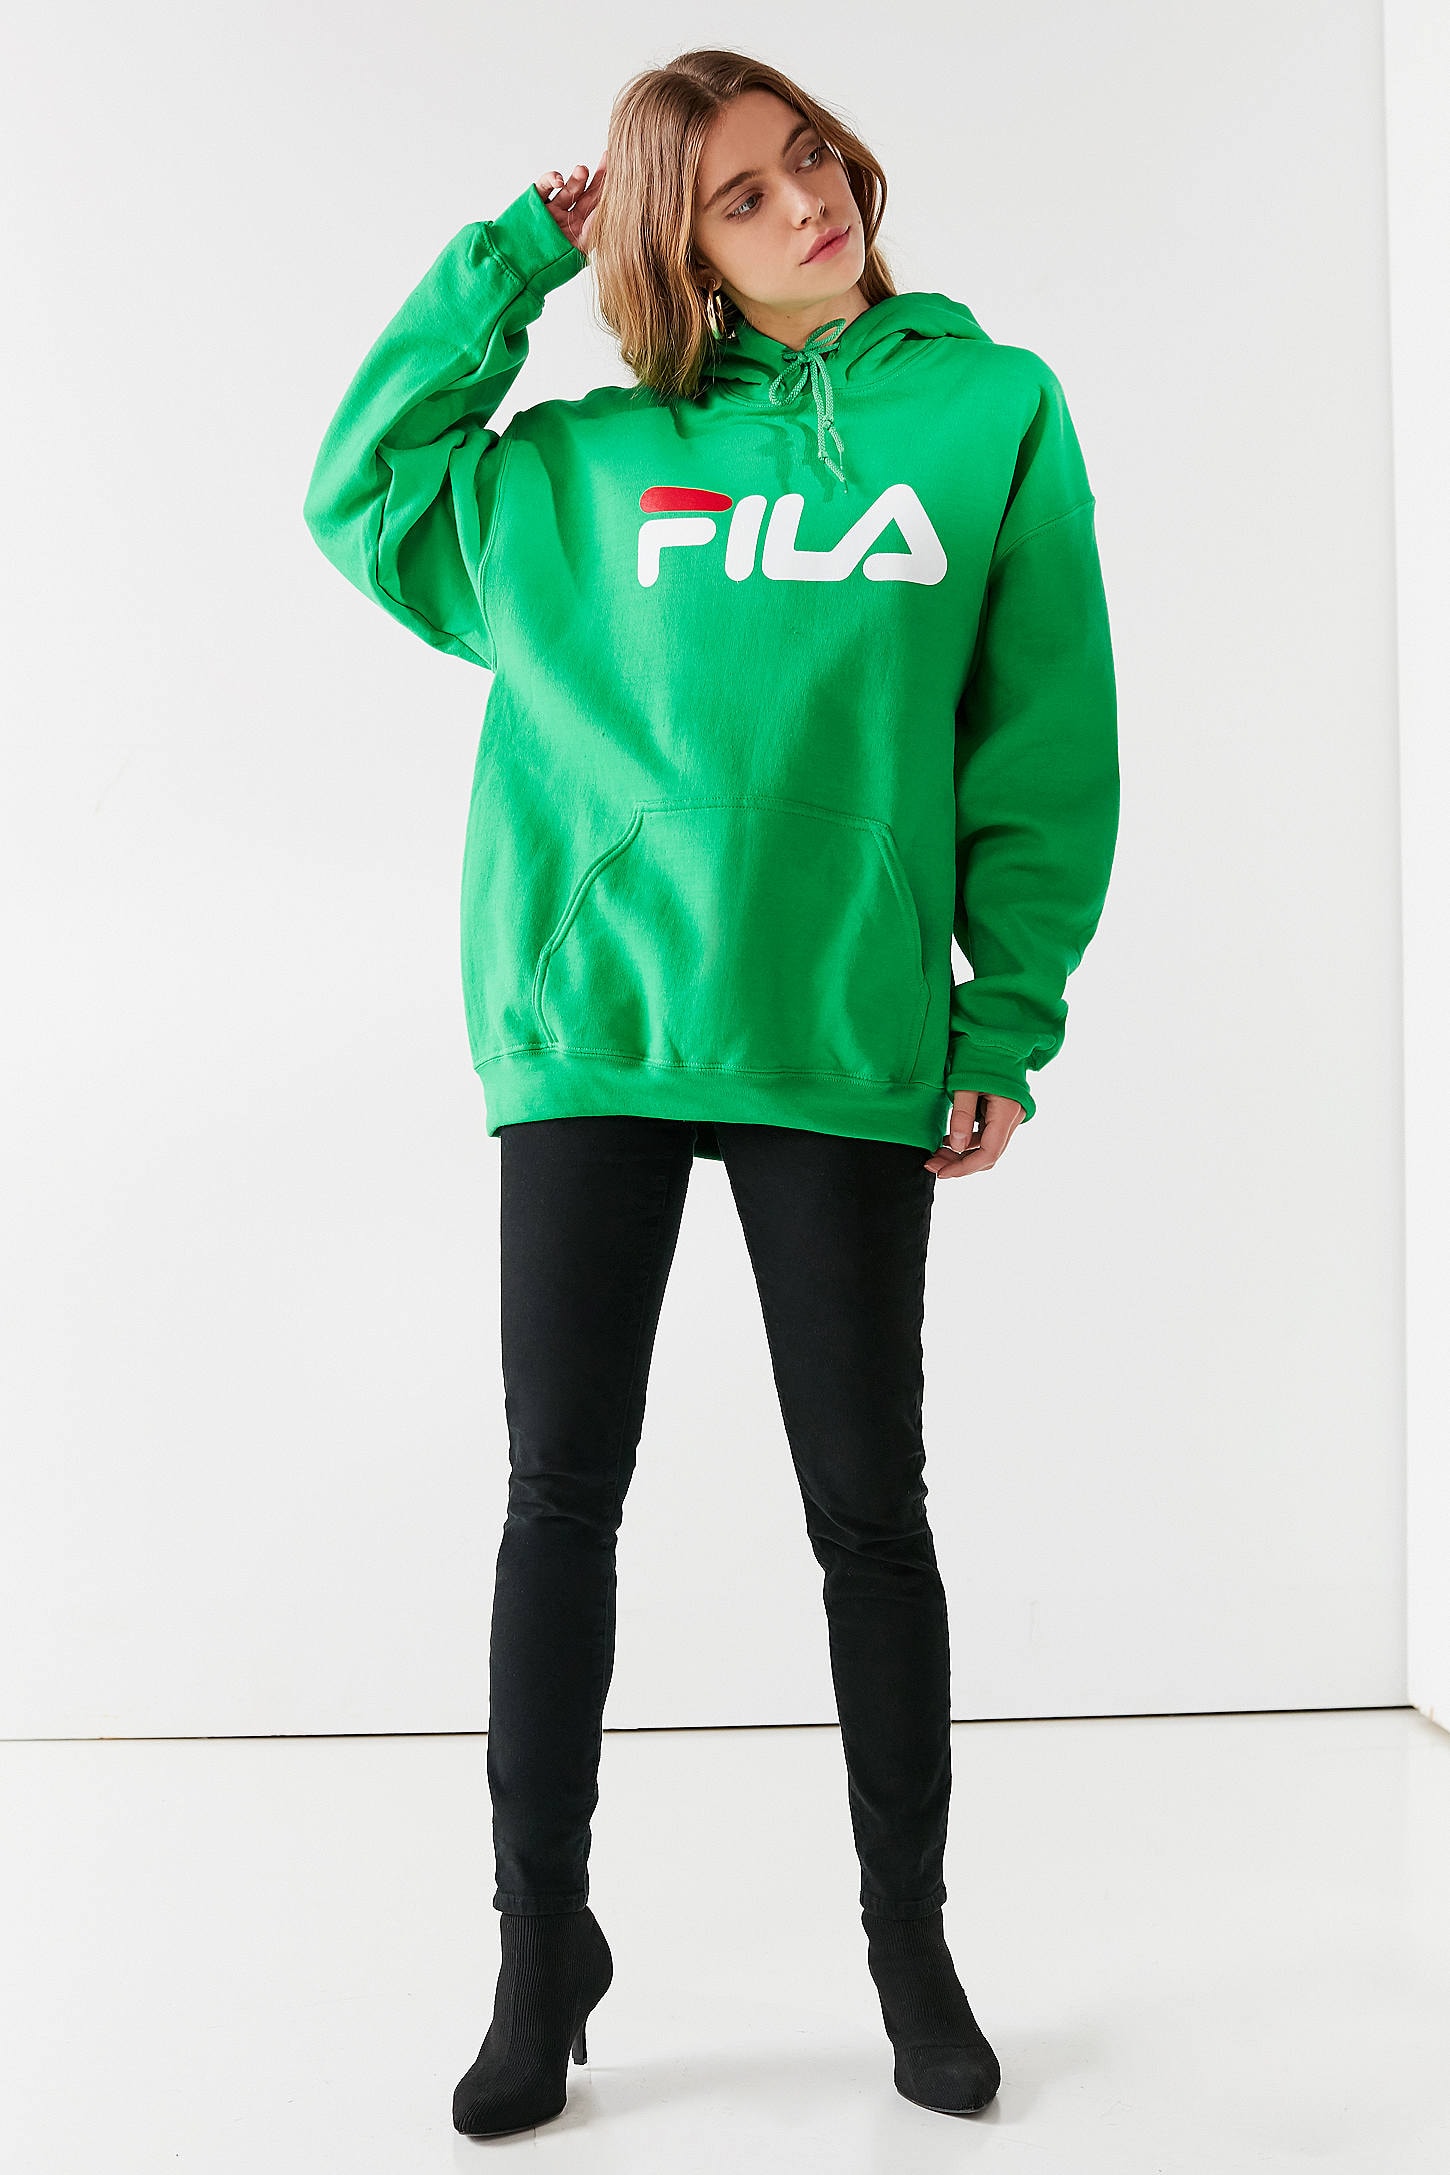 Fila Girls' Active Sweatsuit Set - 2 Piece Performance Fleece